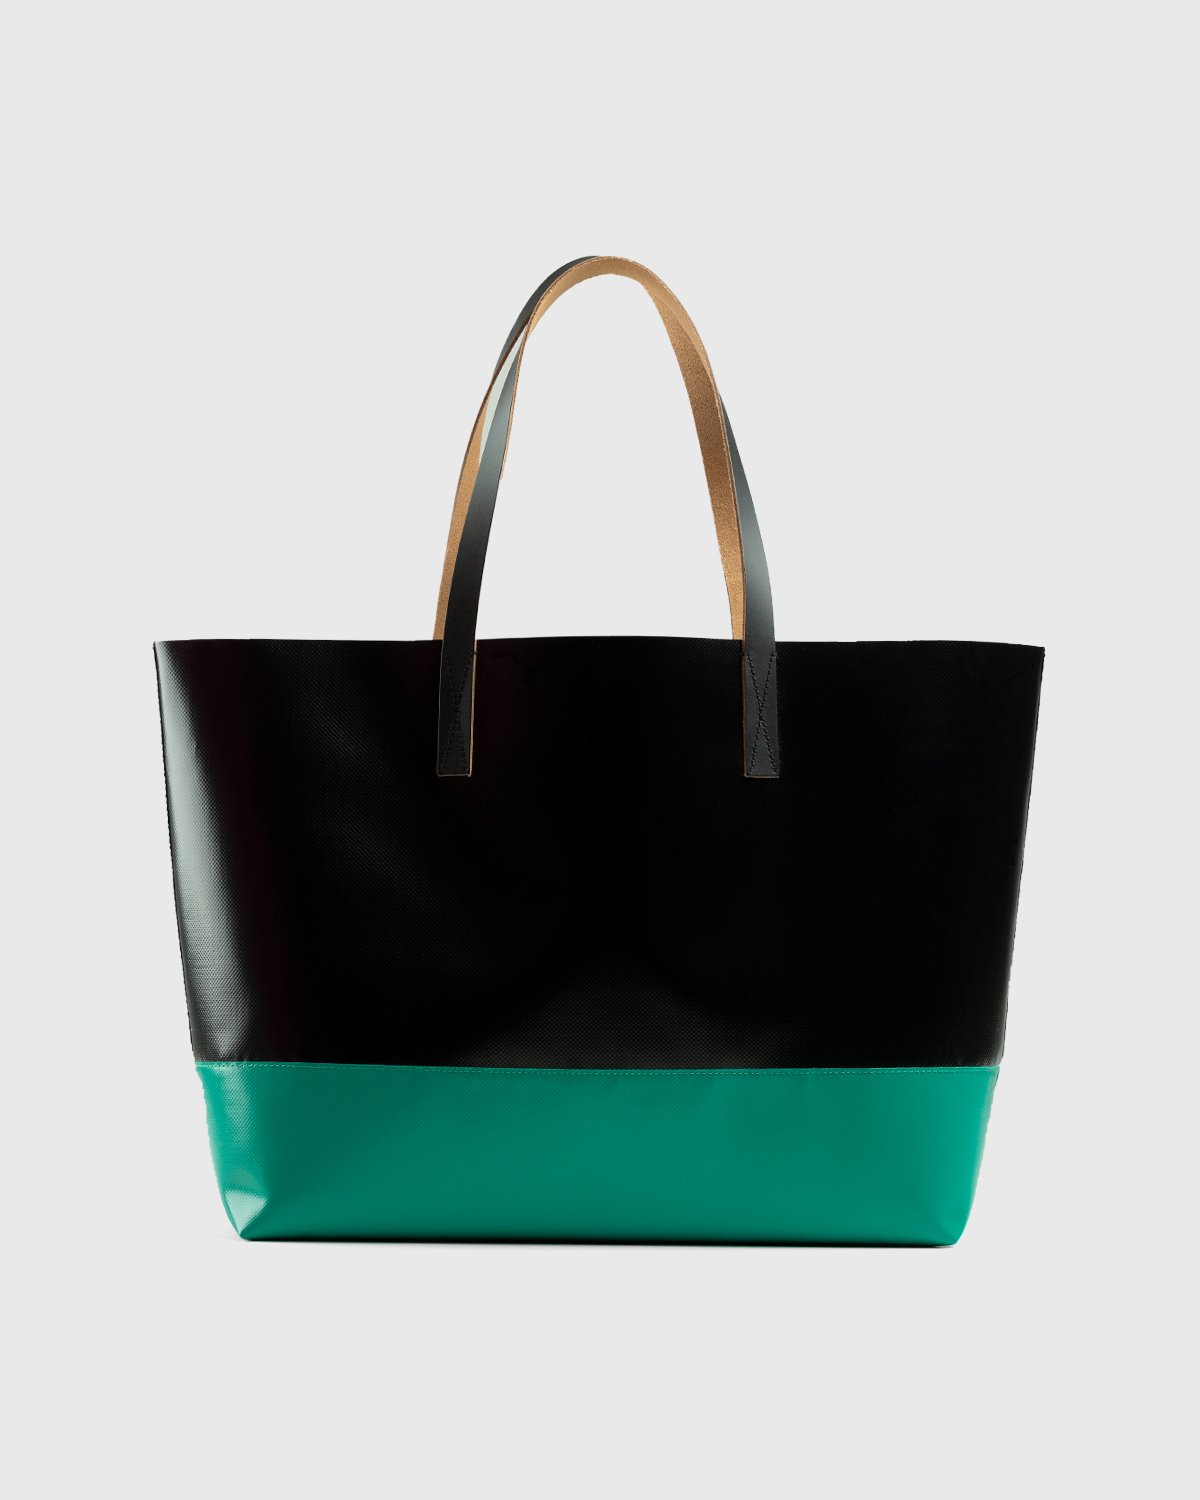 Marni - Tribeca Two-Tone Tote Bag Black/Green - Accessories - Black - Image 2